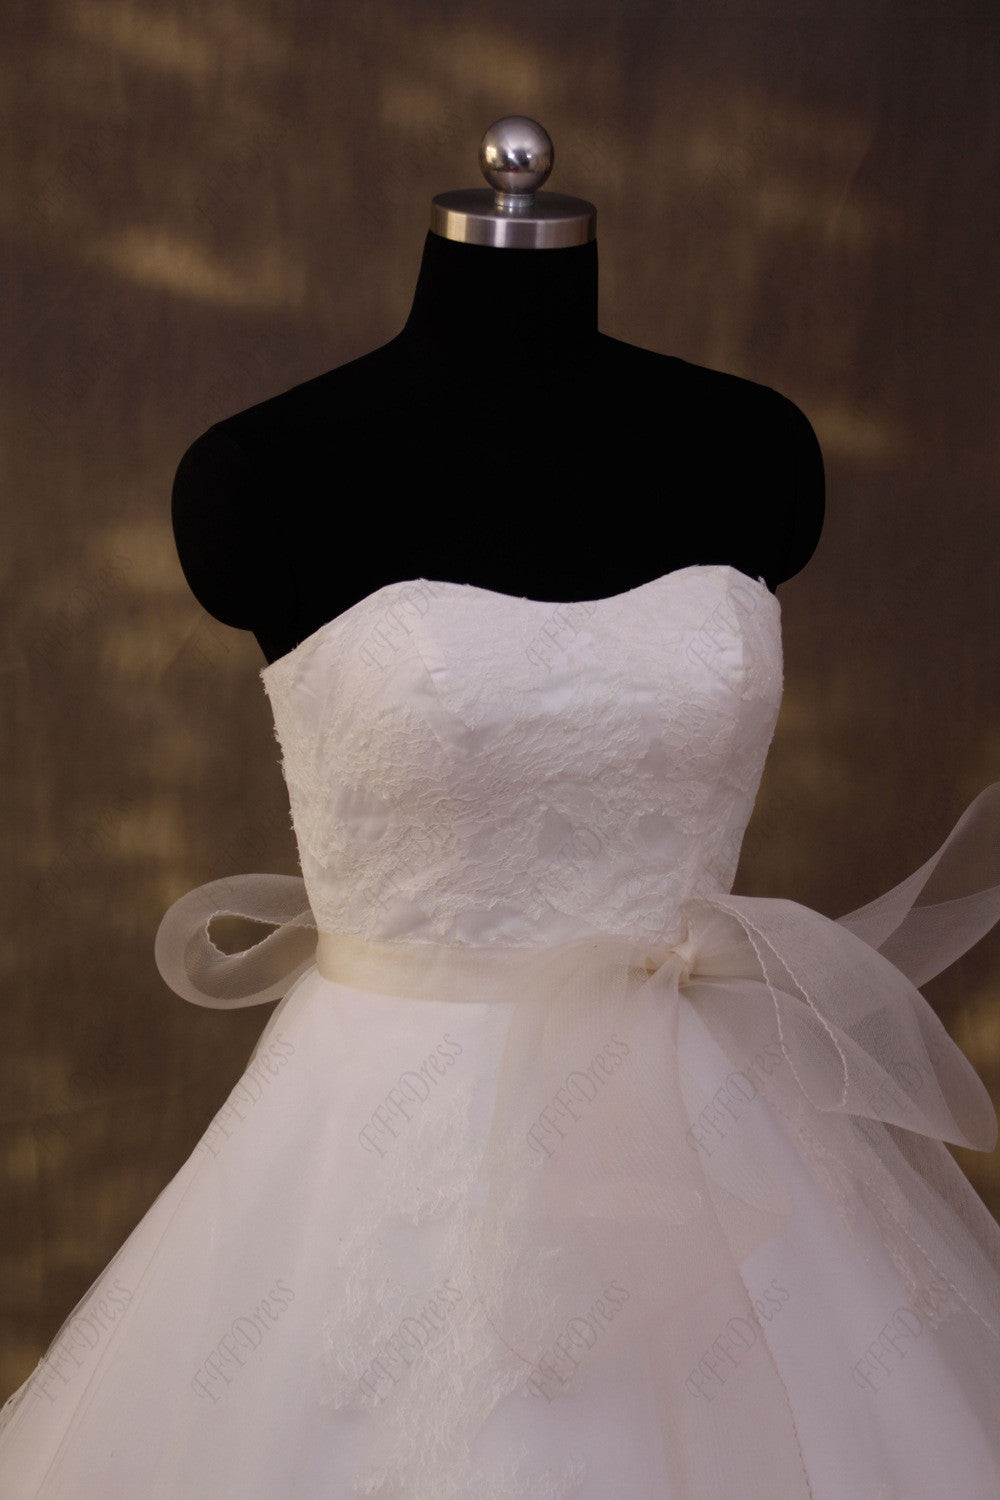 Sweetheart ball gown wedding dress with sash